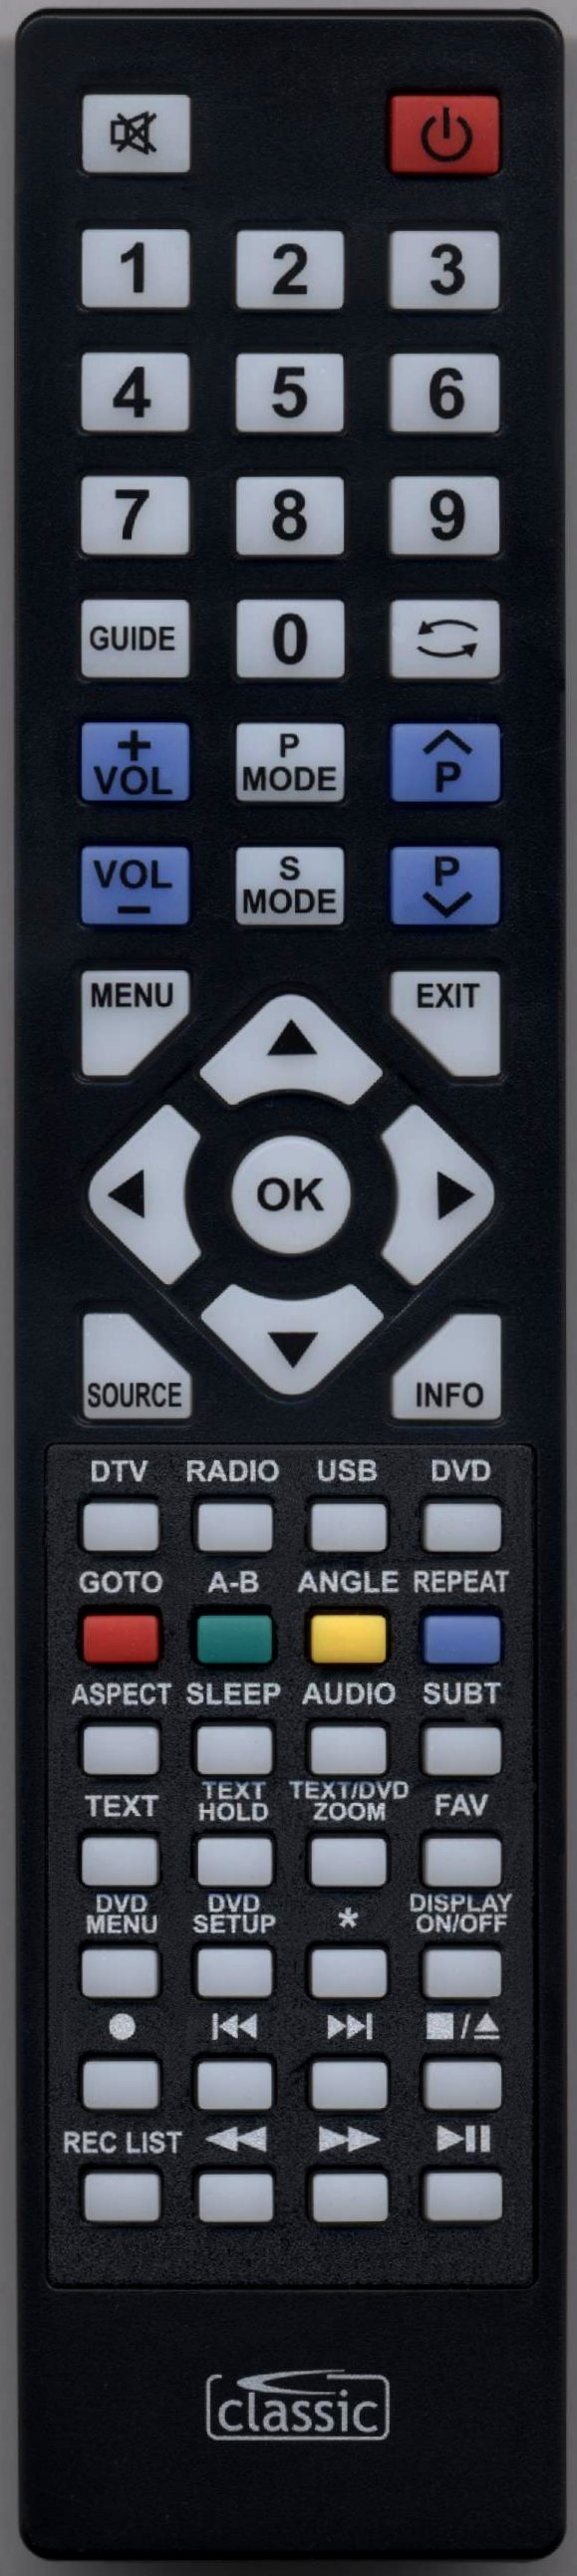 JMB 32/233I-GB-5B2-HKUP-UK Remote Control Alternative 